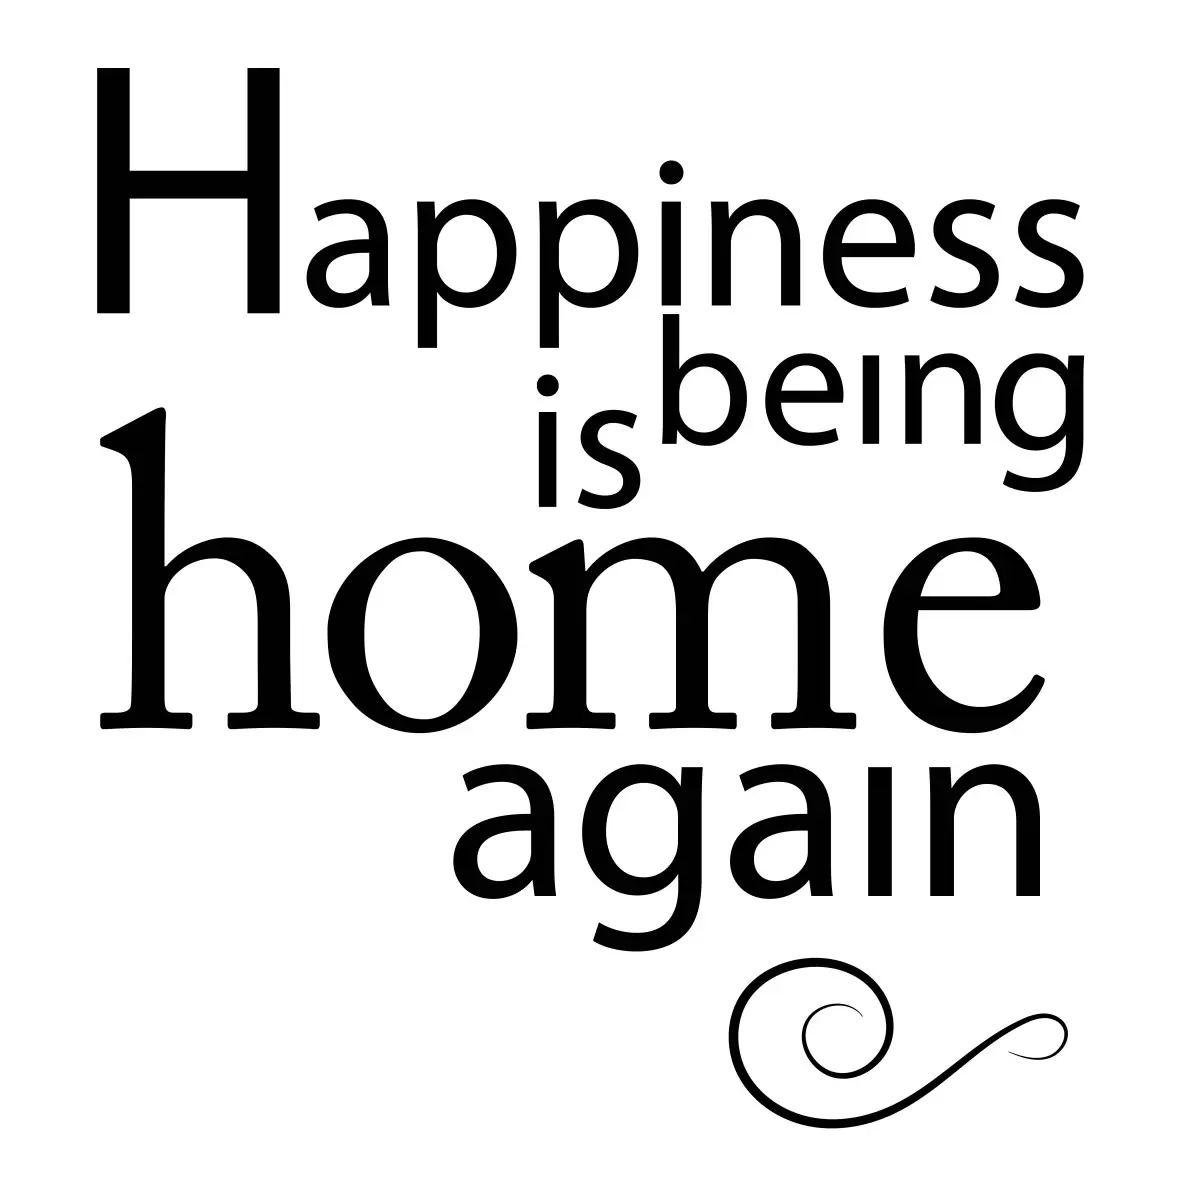 Happiness Being Home - מסגרת עיצובים - מדבקות קיר משפטי השראה טיפוגרפיה דקורטיבית  - מק''ט: 241028